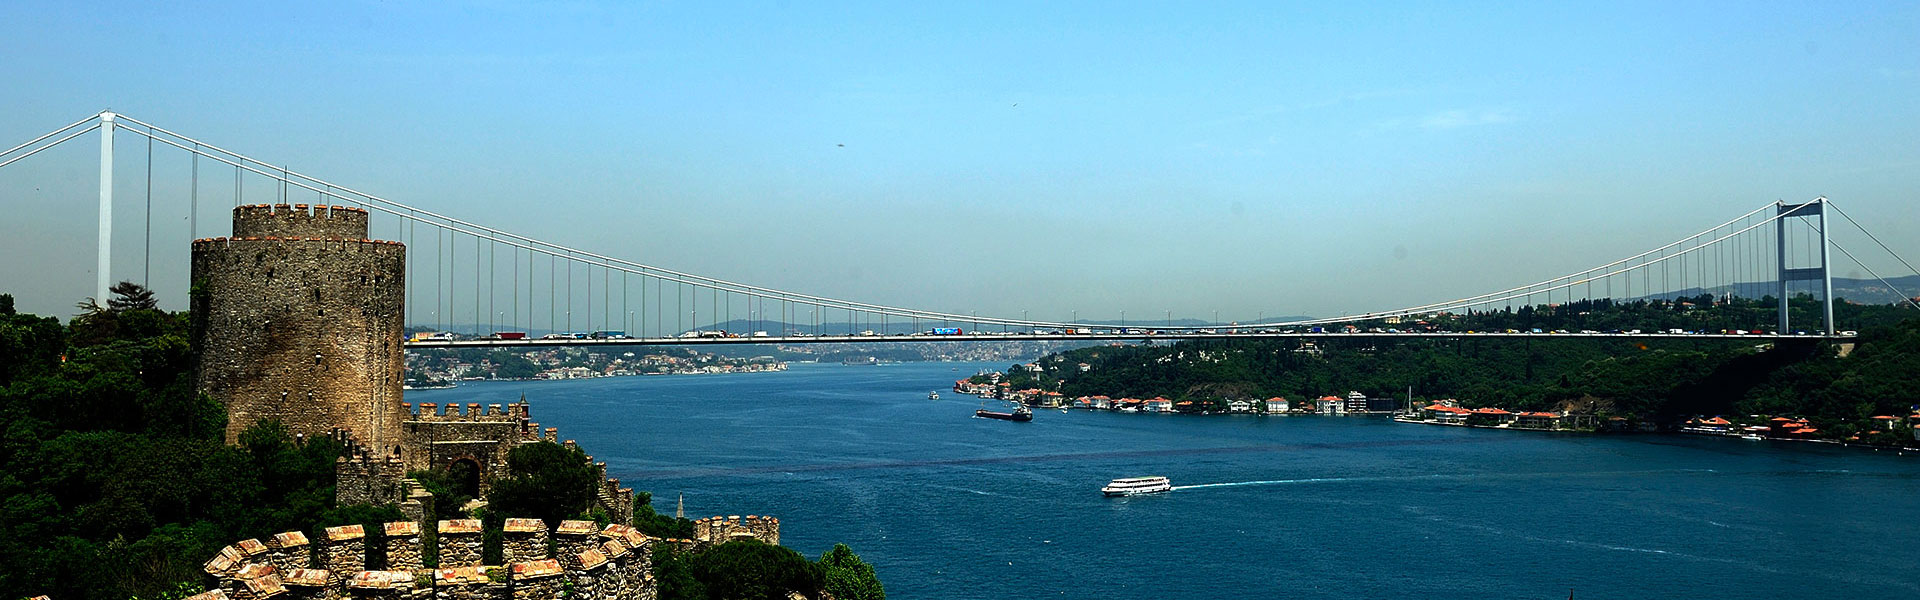 Istanbul Bosphorus Organizations